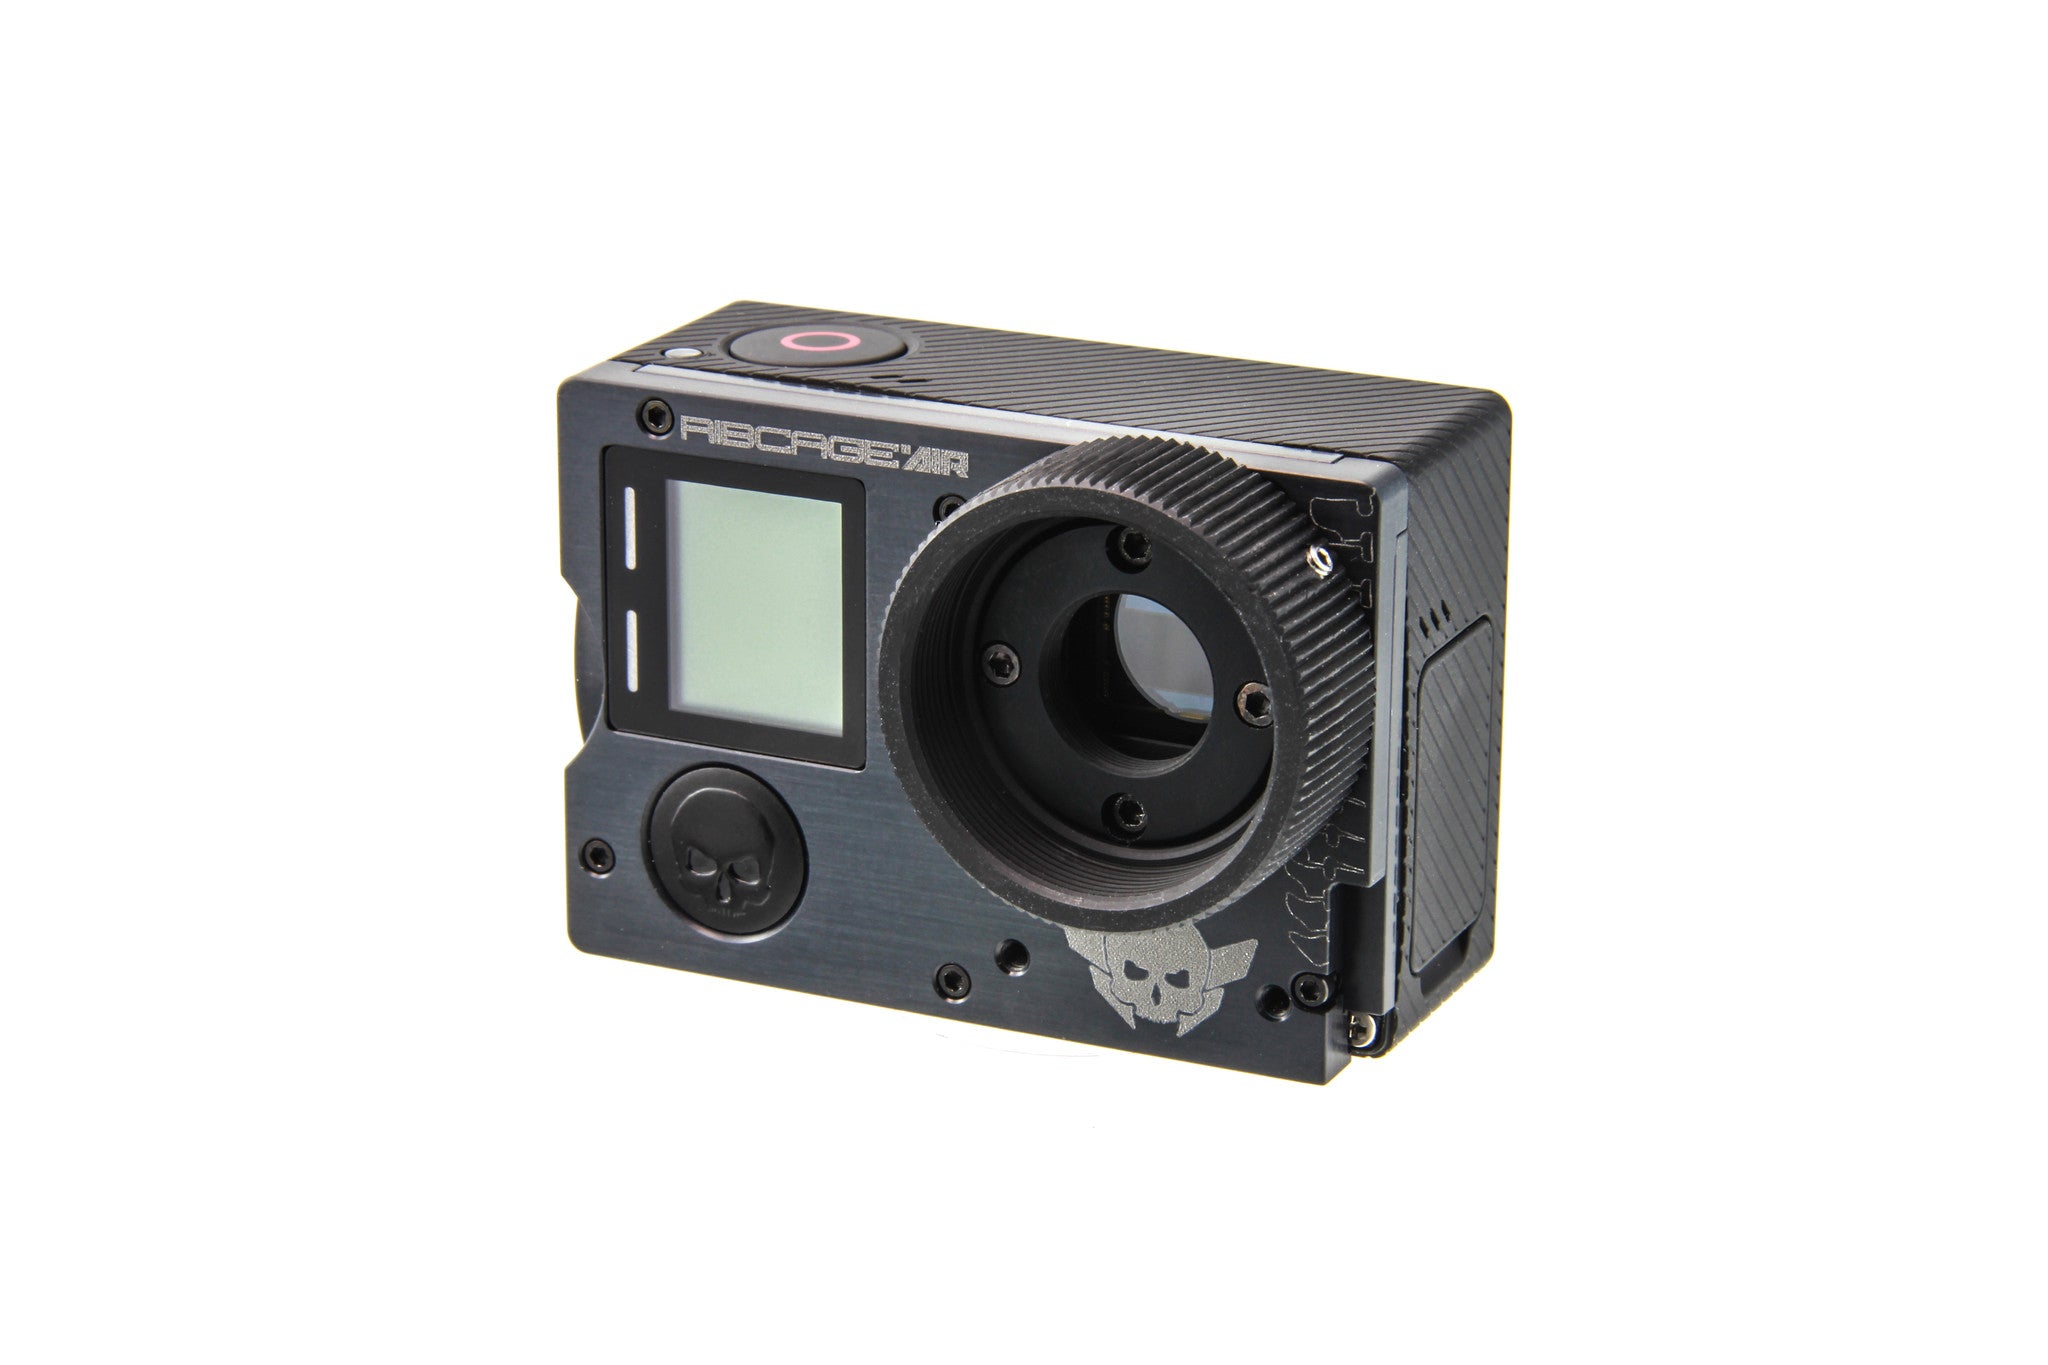 RibCage Air Modified GoPro Hero 4 Black (Includes Camera)